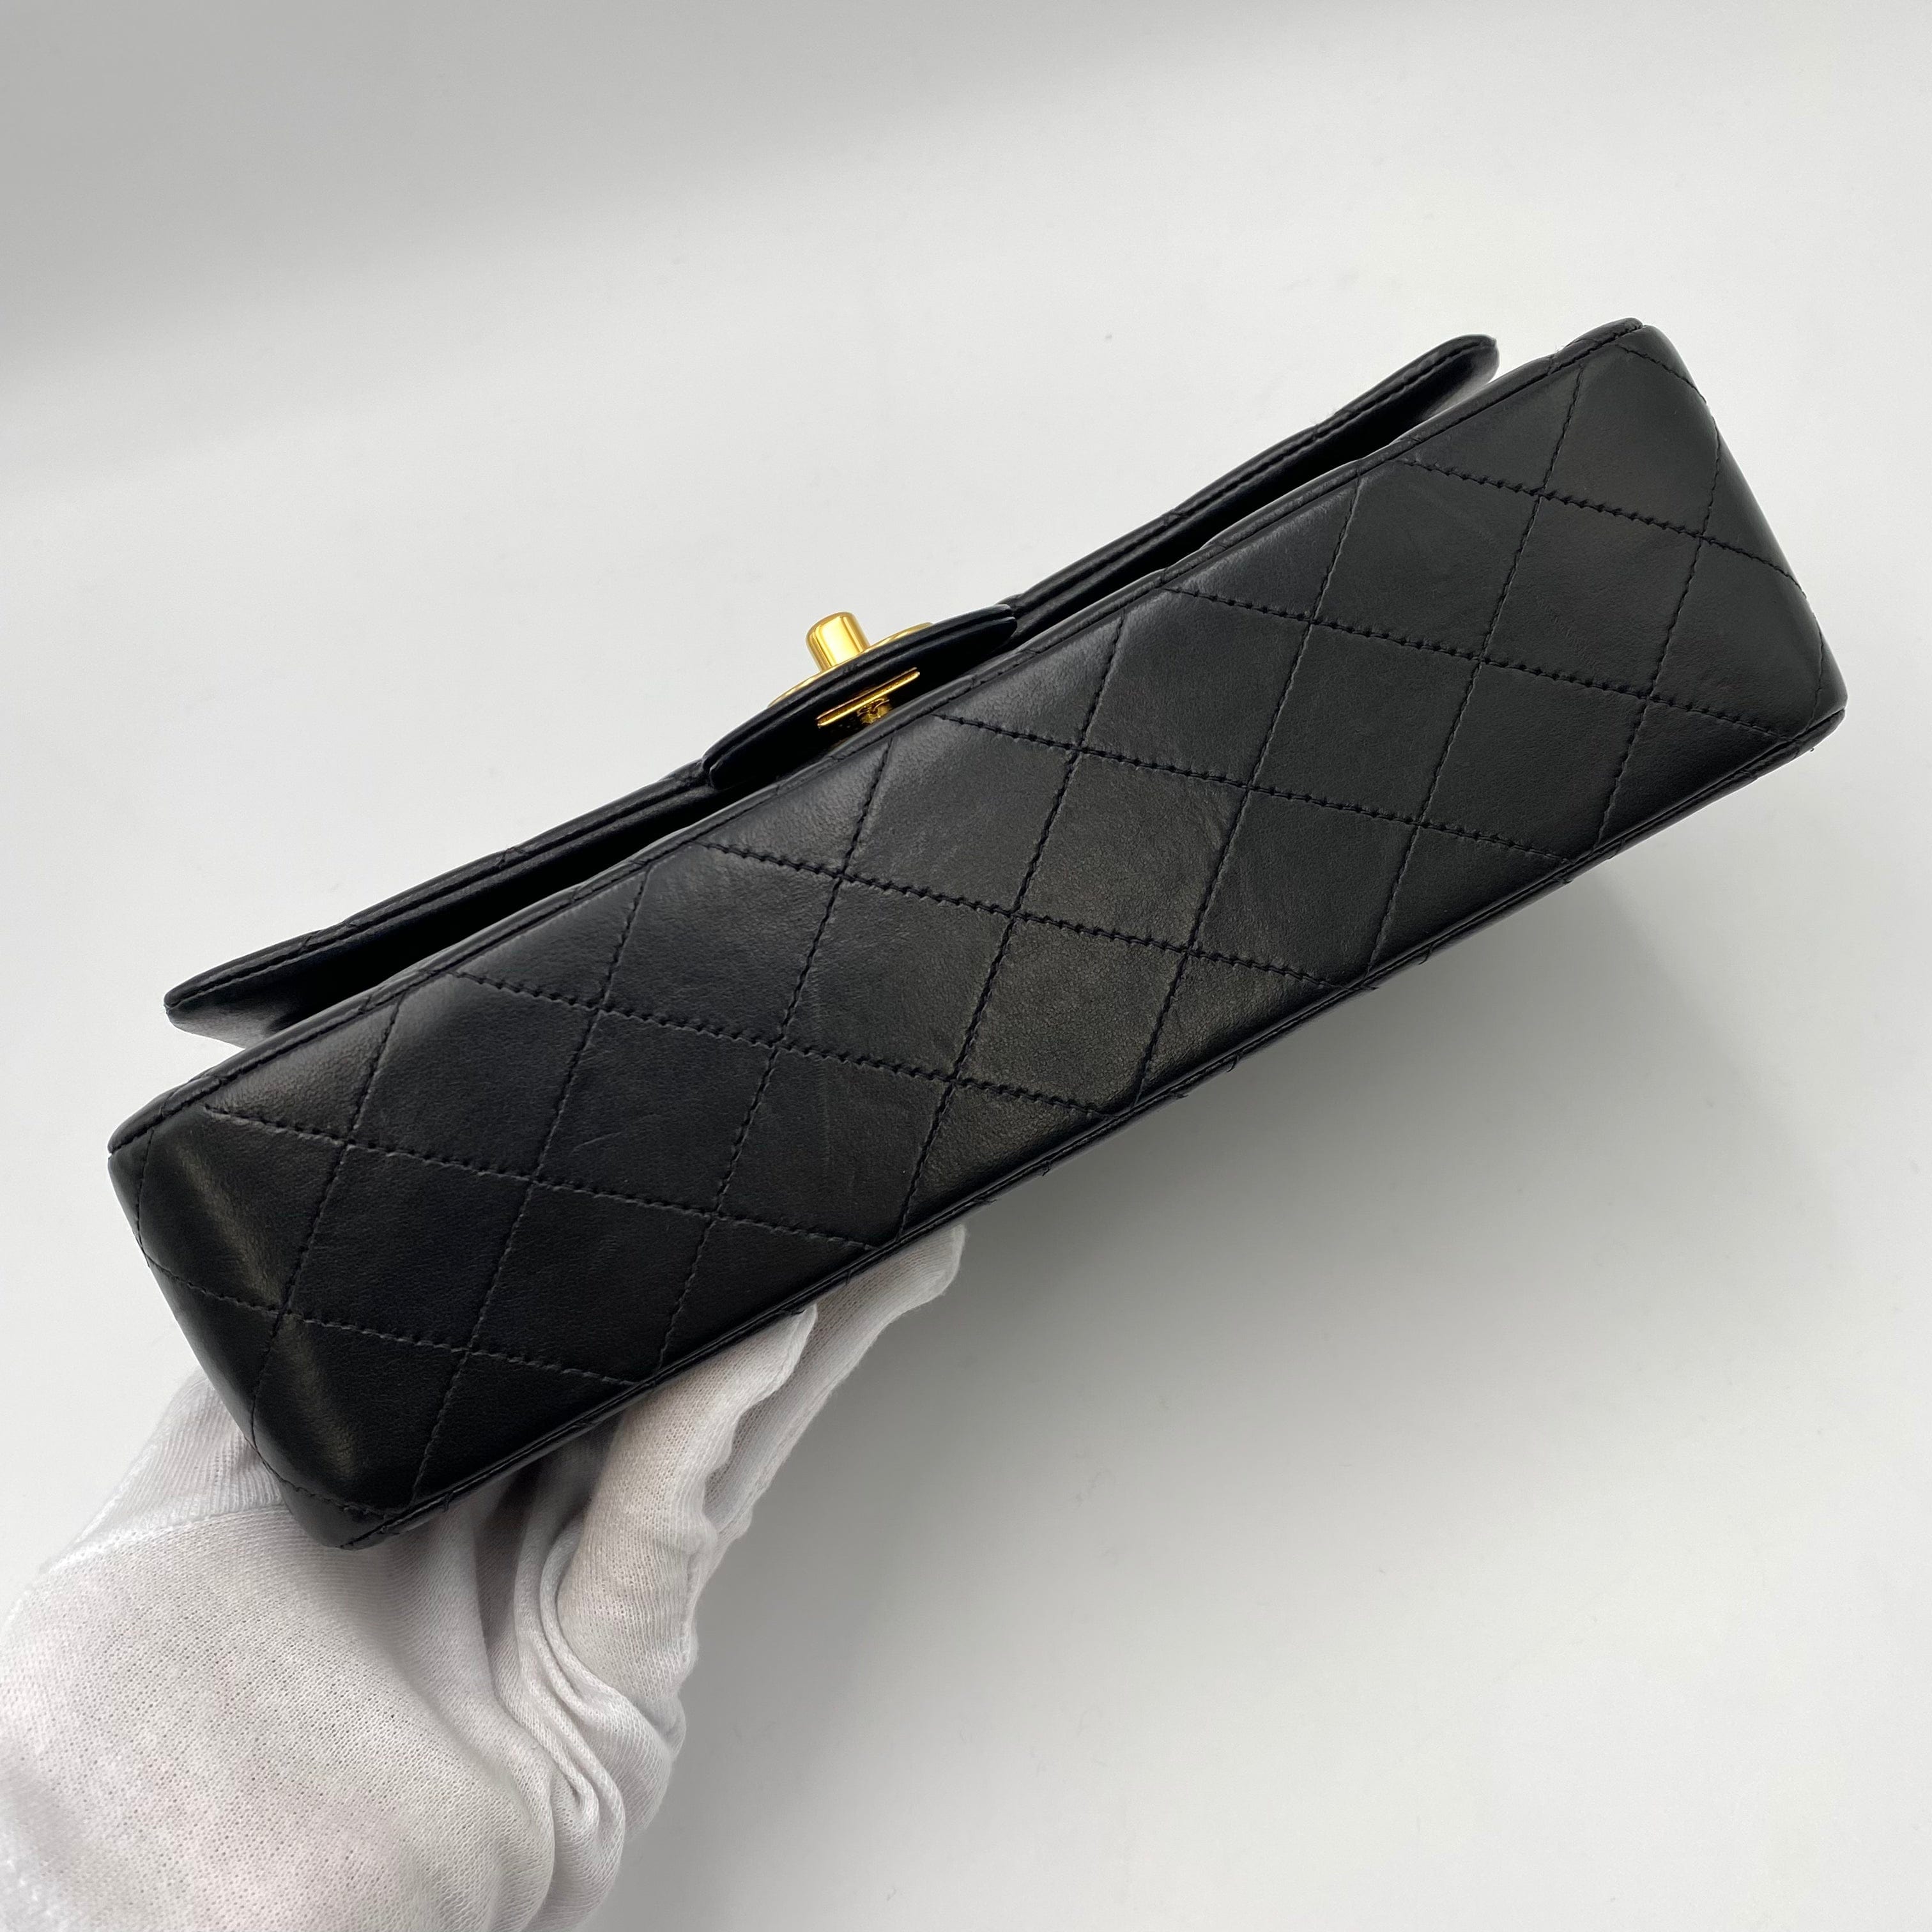 Luxury Promise CHANEL VINTAGE CLASSIC FLAP MEDIUM CHAIN SHOULDER BAG BLACK LAMB SKIN 90219630